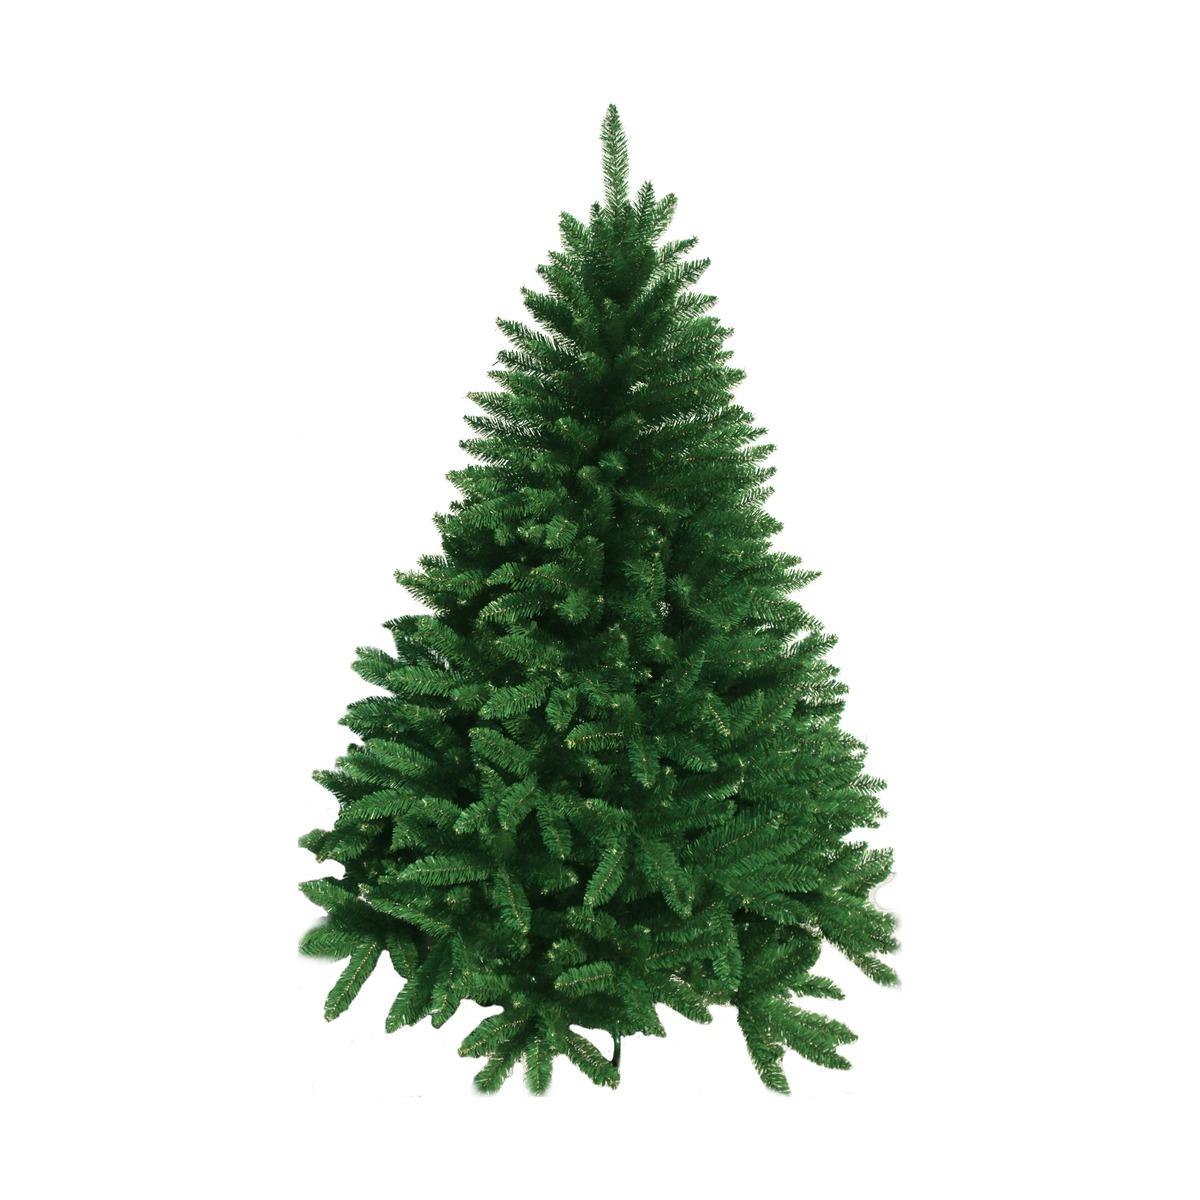 Sapin de Noël canadien en plastique - Hauteur 180 cm - Vert